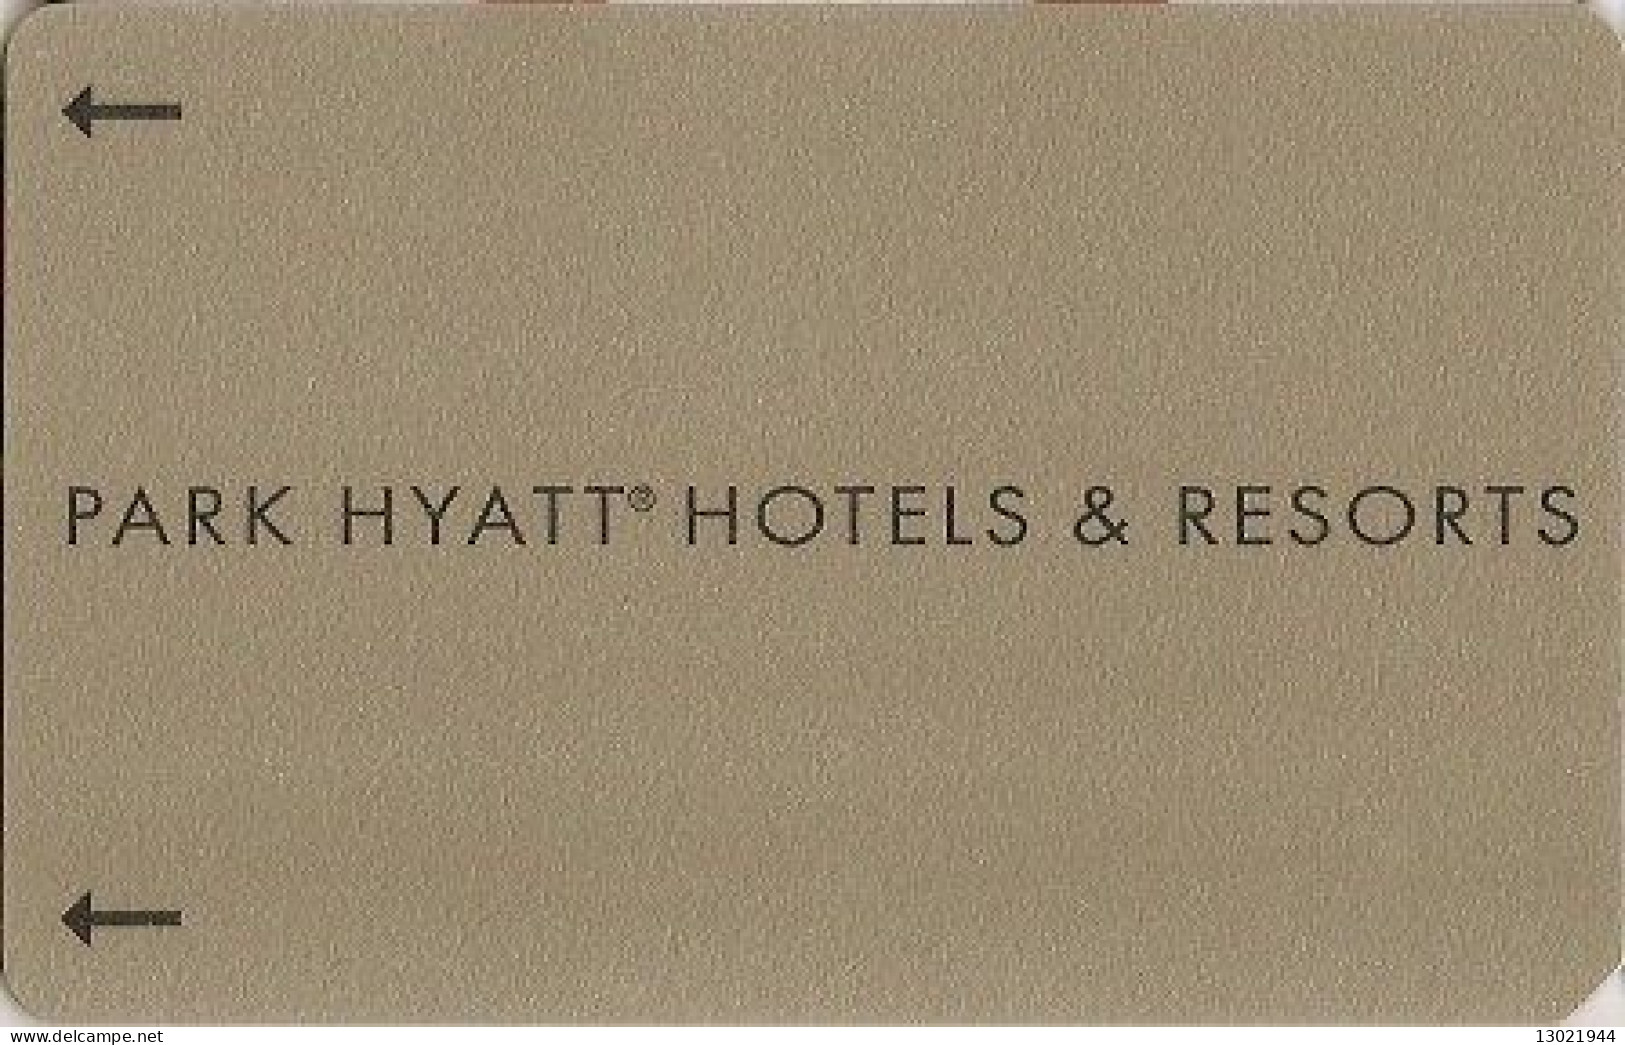 STATI UNITI  KEY HOTEL  Park Hyatt Hotels & Resorts - Chiavi Elettroniche Di Alberghi